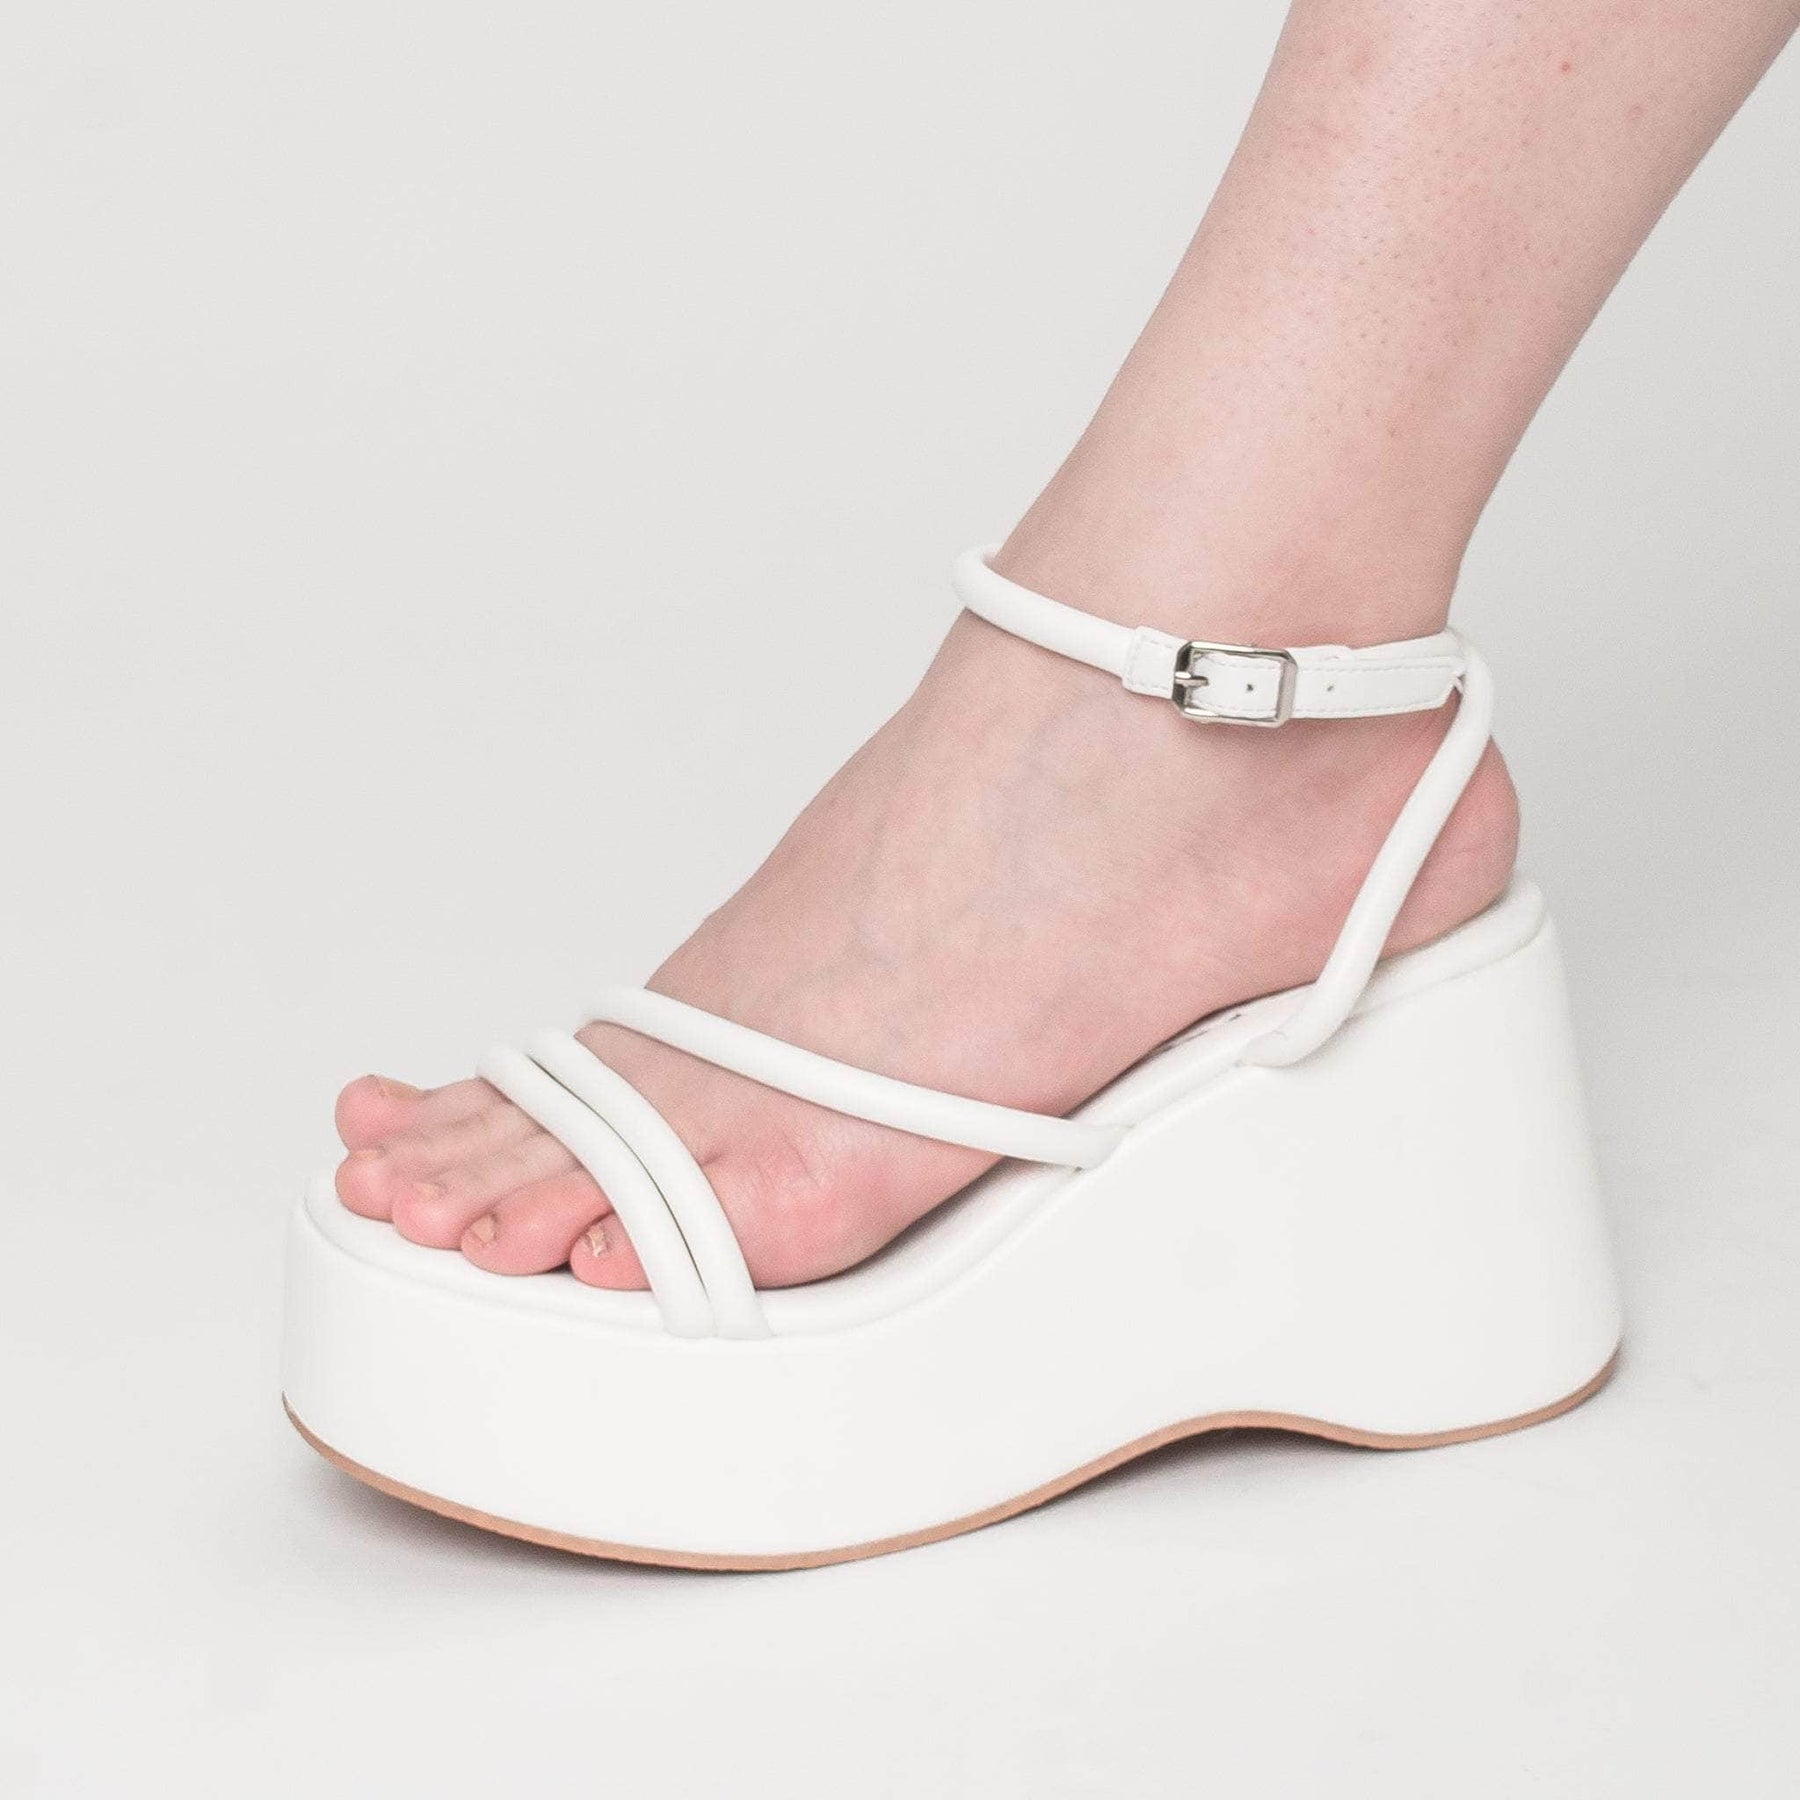 Buy Women Black Casual Sandals Online | SKU: 44-3184-11-36-Metro Shoes